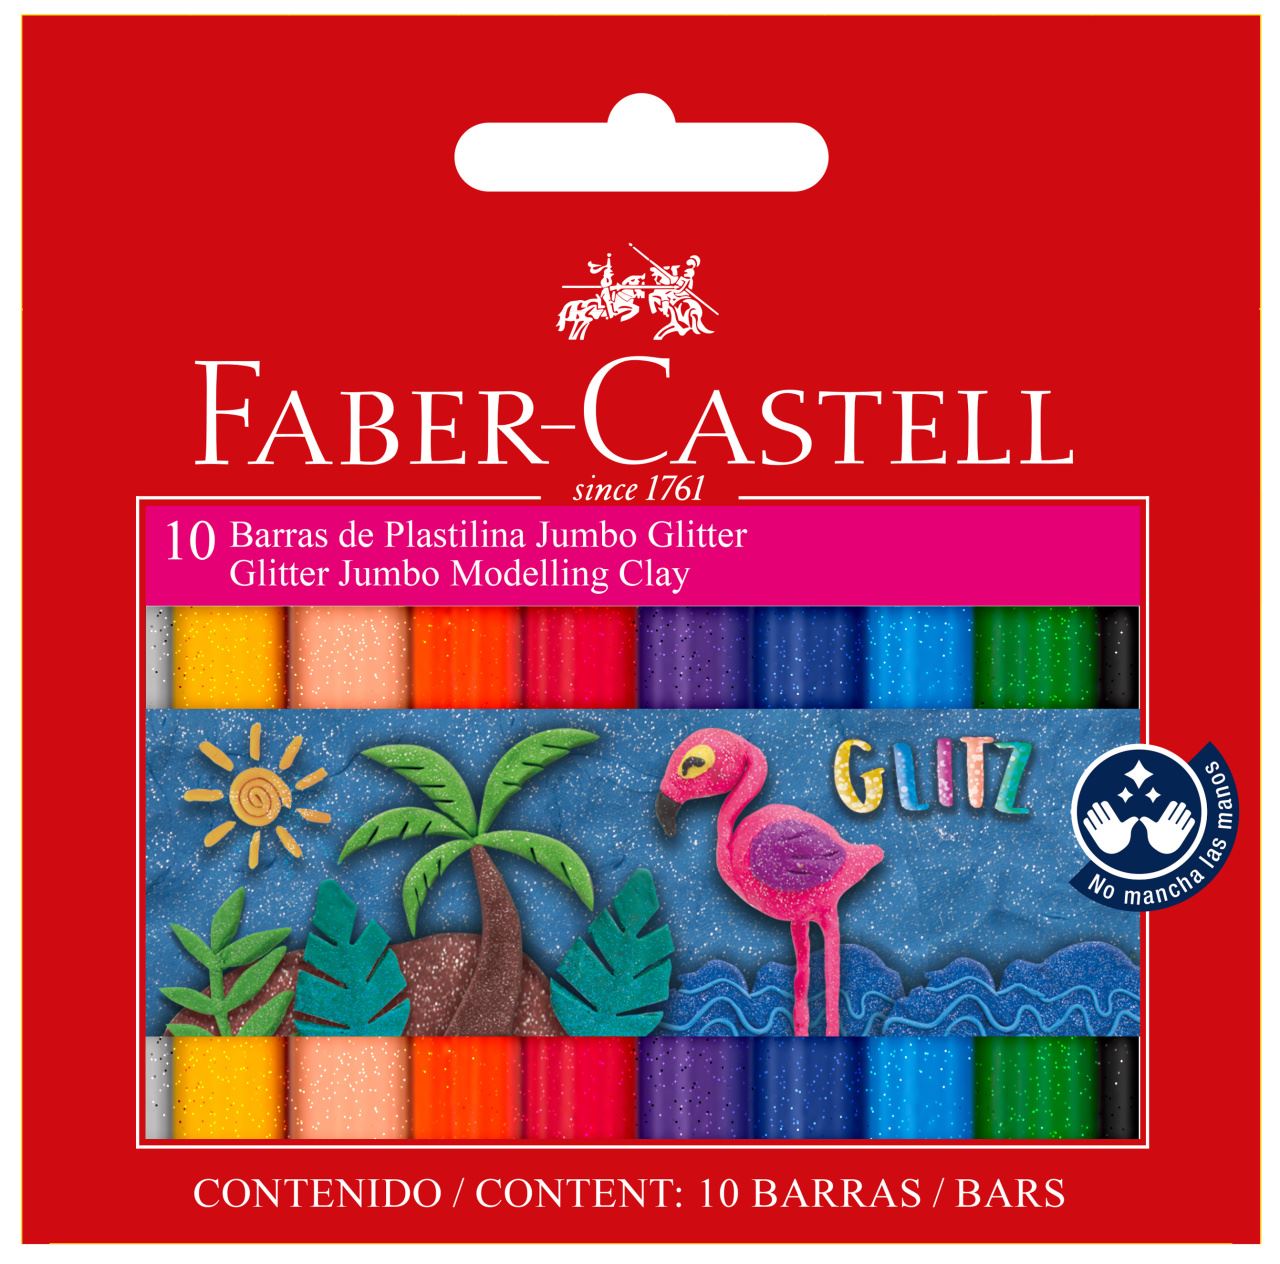 Faber-Castell - Modelling clay Jumbo Glitter setctn 10x